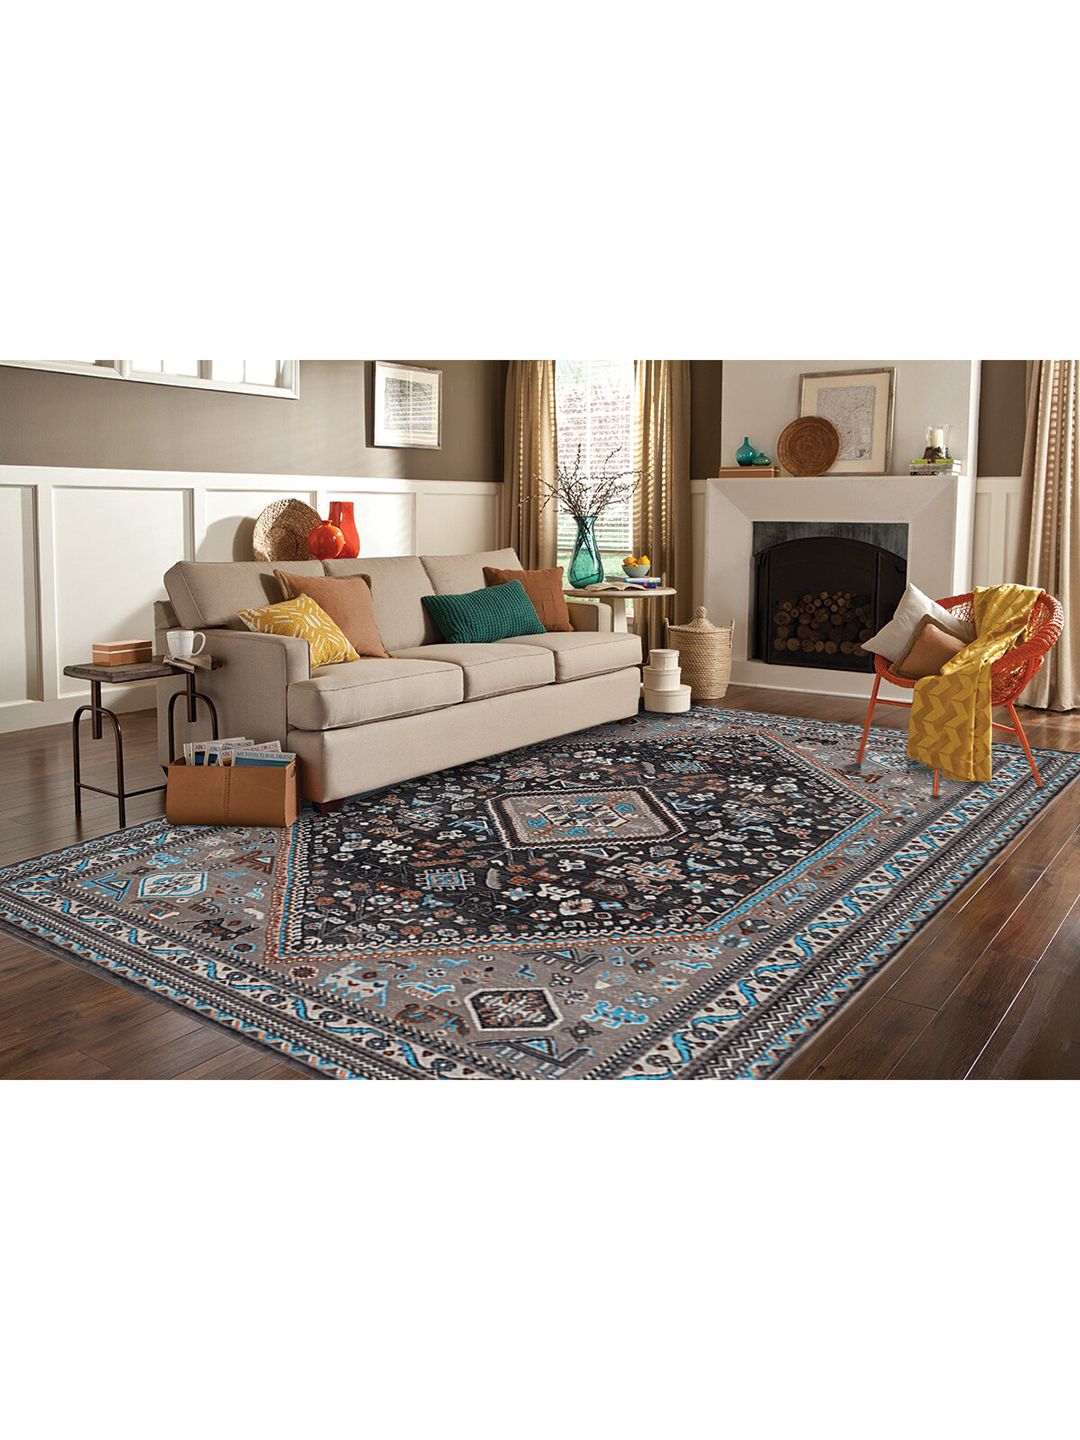 DDecor Grey & Black Traditional Rectangular Polypropylene Carpet Price in India